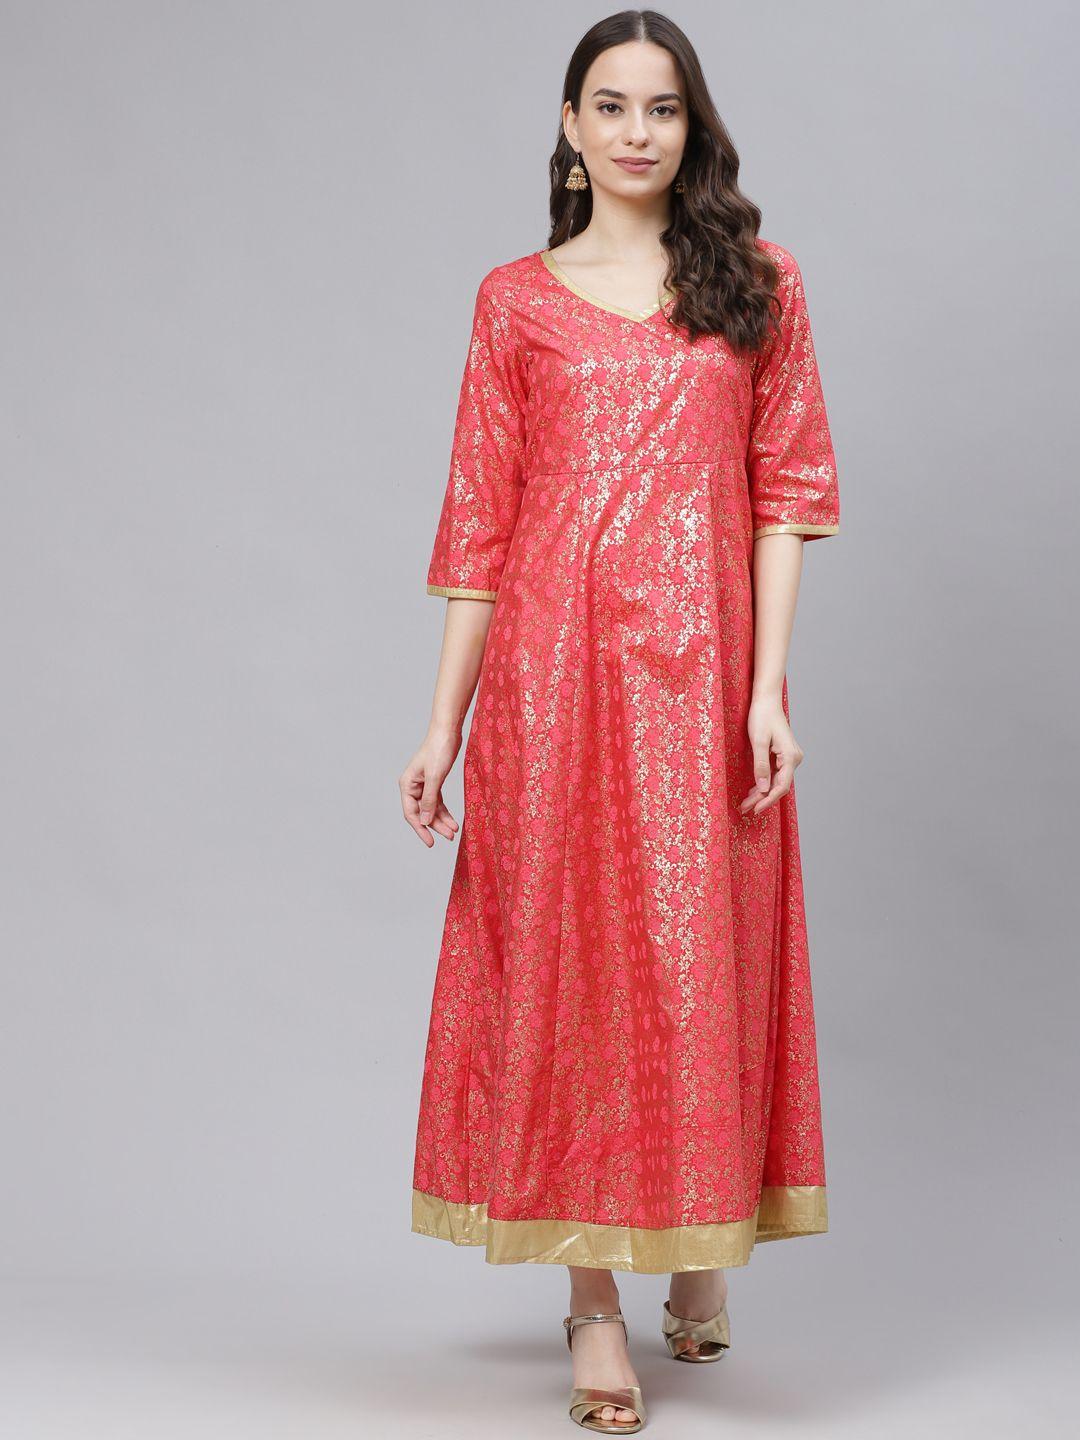 aurelia coral pink & golden ethnic motifs a-line maxi dress